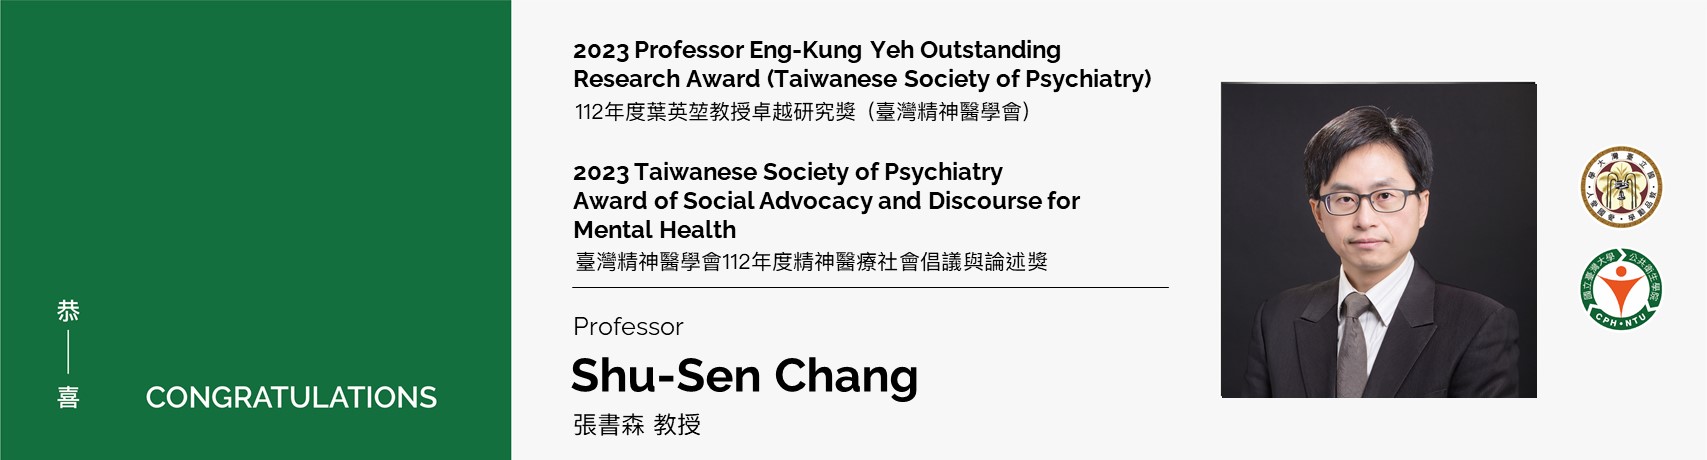 【Congratulations!】 Prof. Shu-Sen Chang have awarded 2023 Taiwanese Society of Psychiatry Award of Social Advocacy Awards